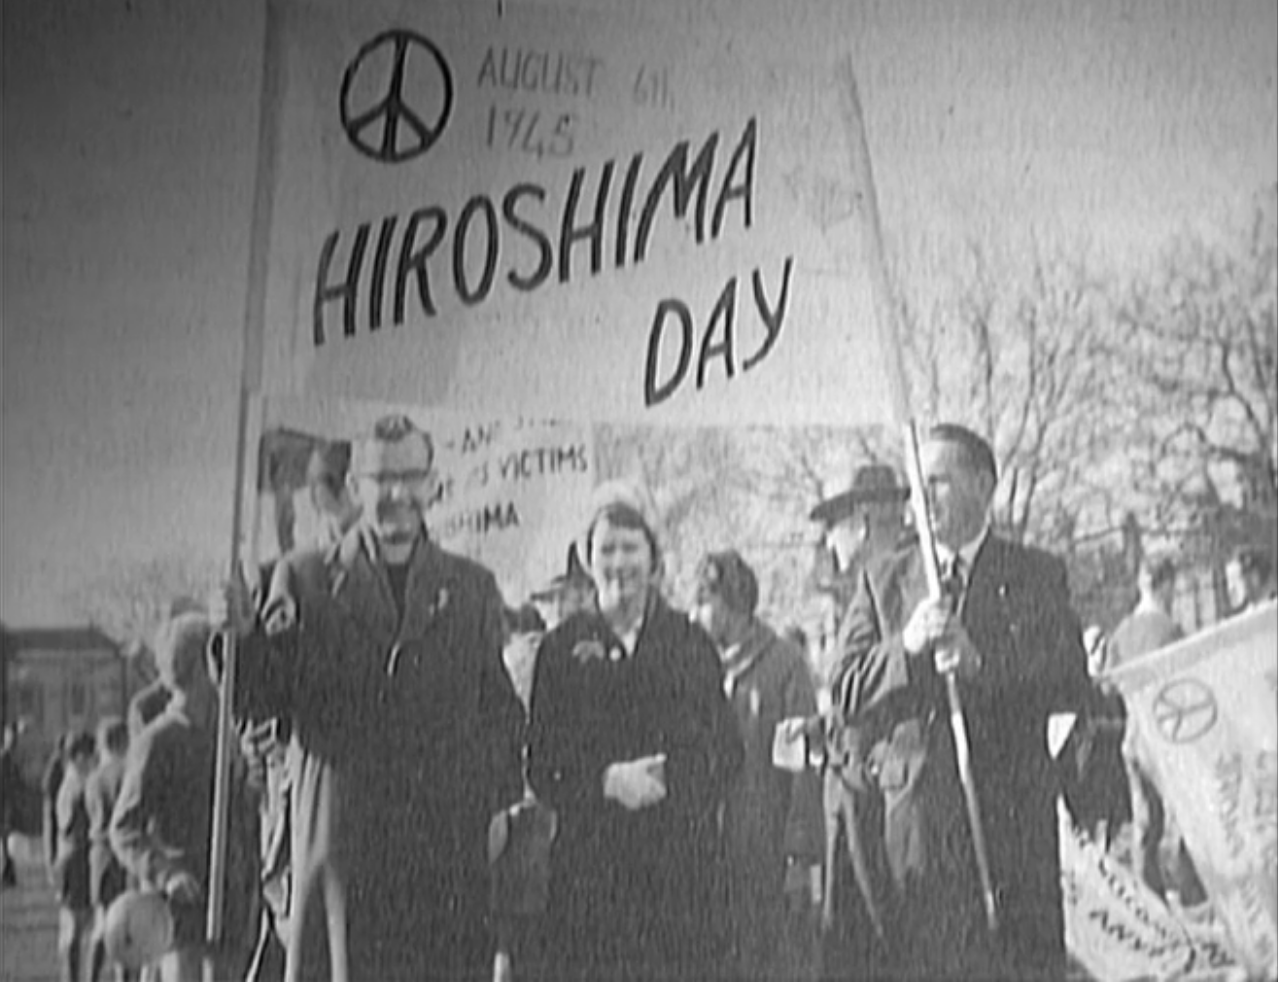 Hiroshima-Day